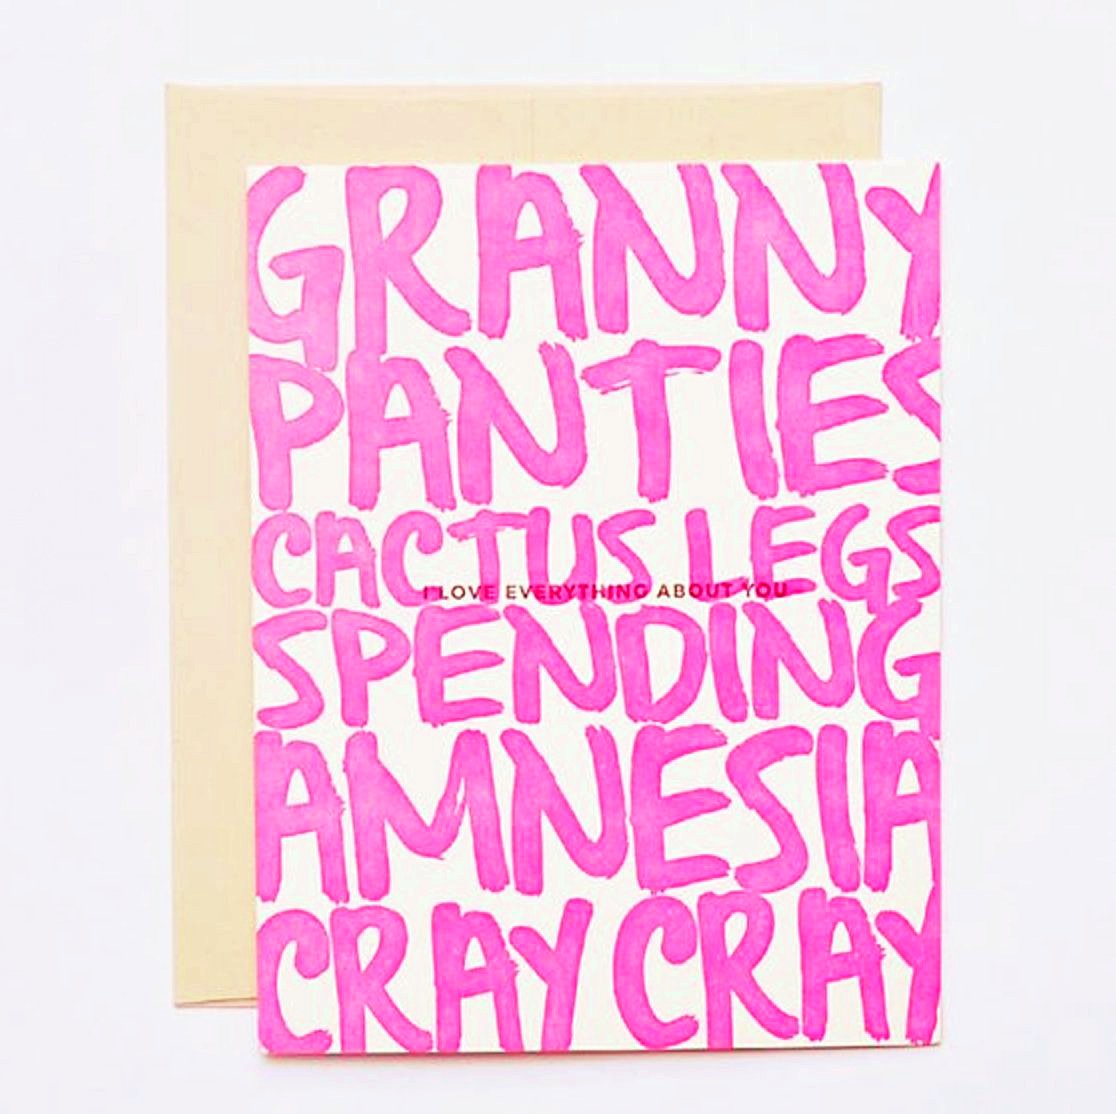 granny panties, random.act